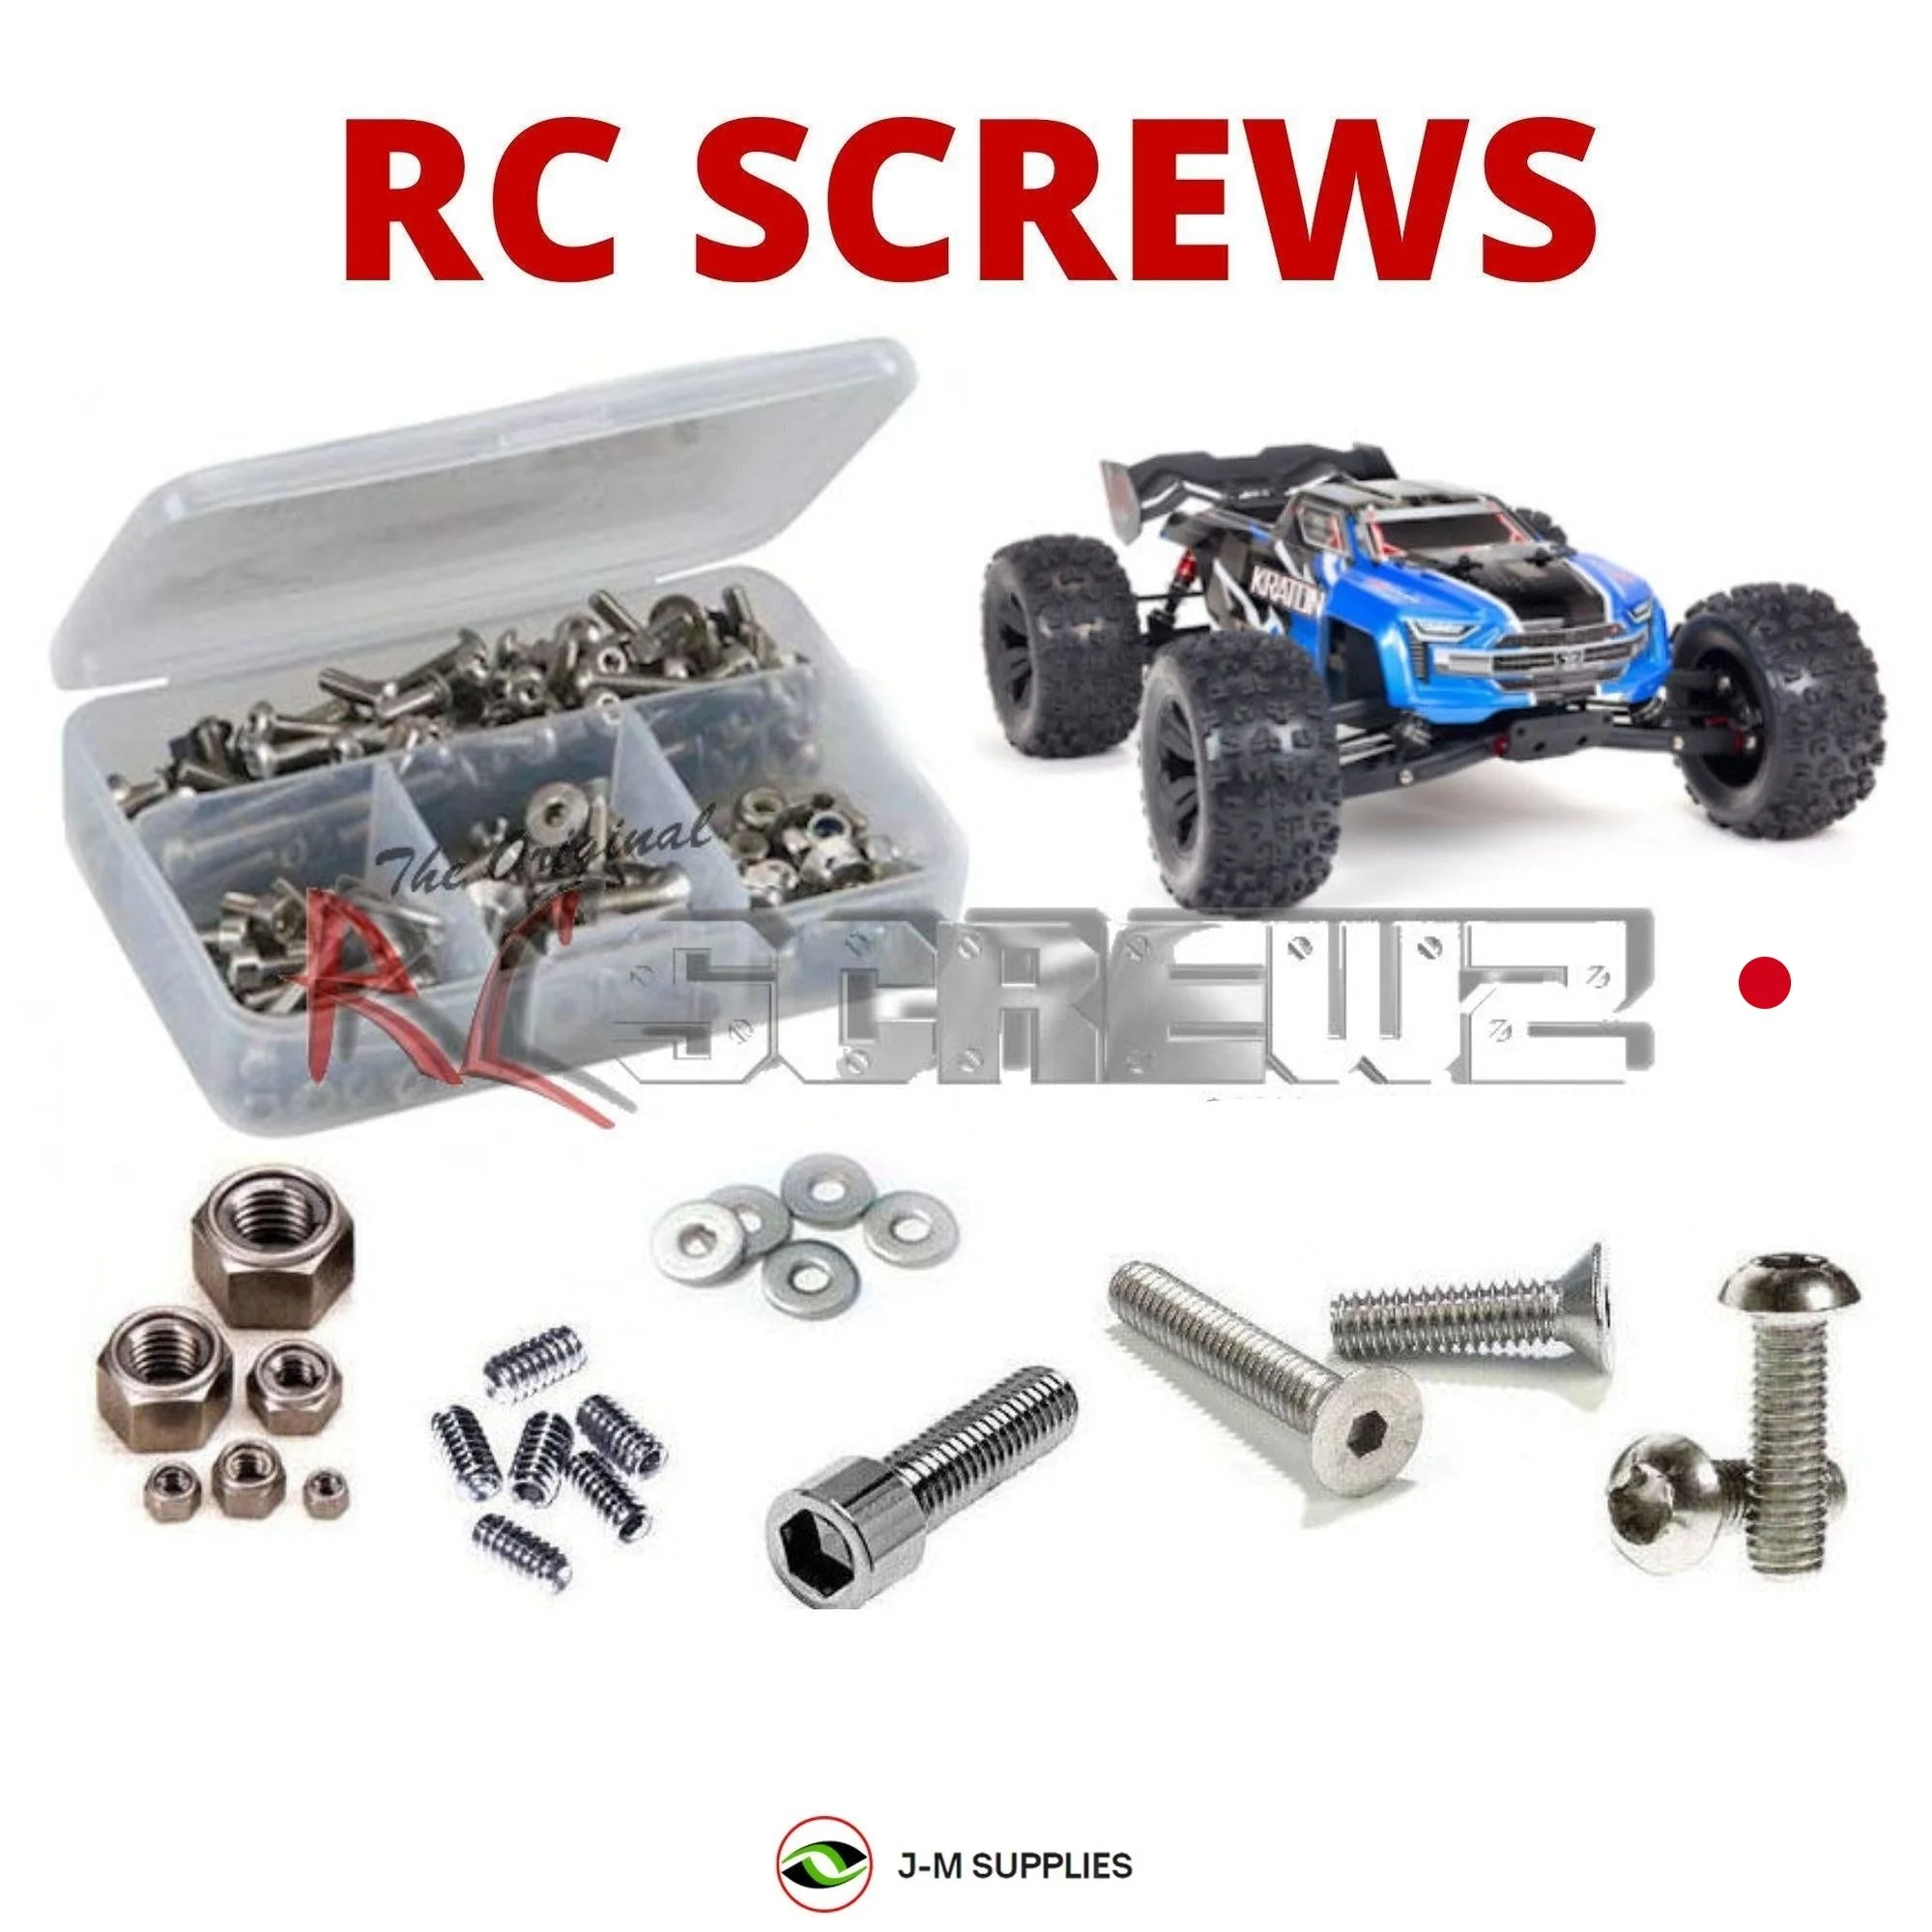 RCScrewZ Stainless Screw Kit ara038 for Arrma Kraton 6s V5 1/8 BLX #ARA8608V5 MT - Picture 1 of 12